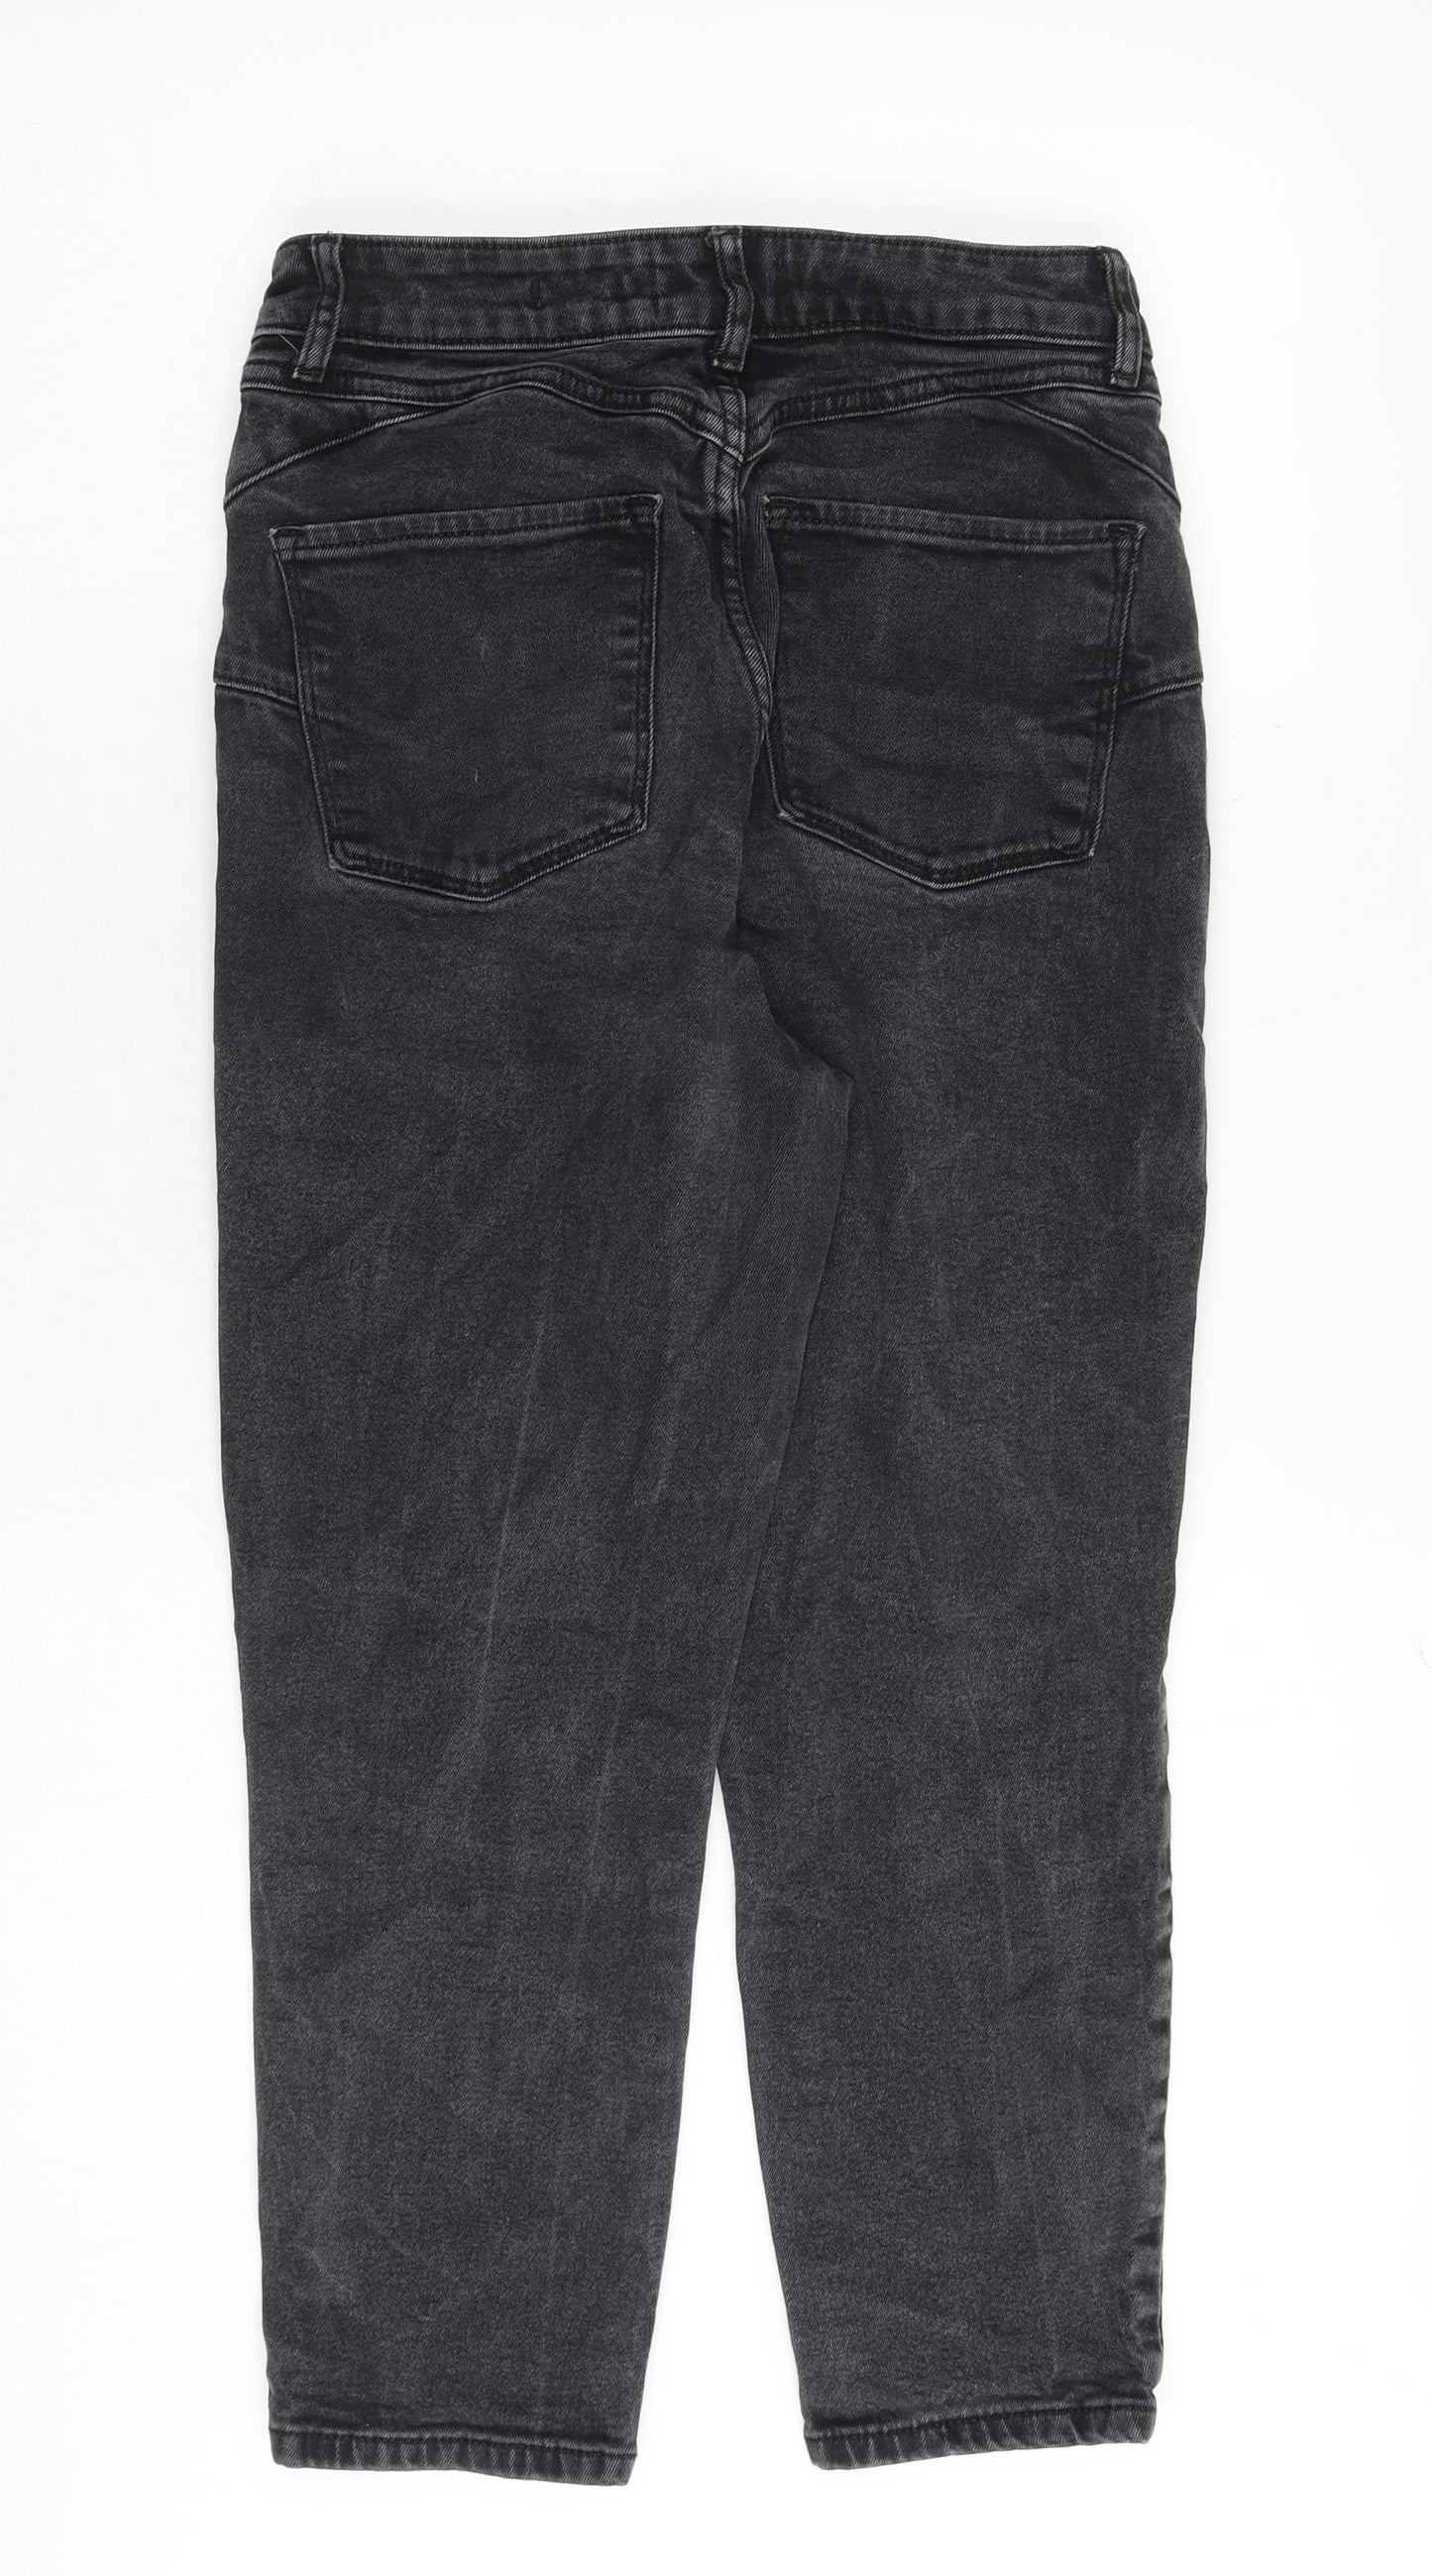 New Look Womens Black Cotton Mom Jeans Size 10 Regular Zip